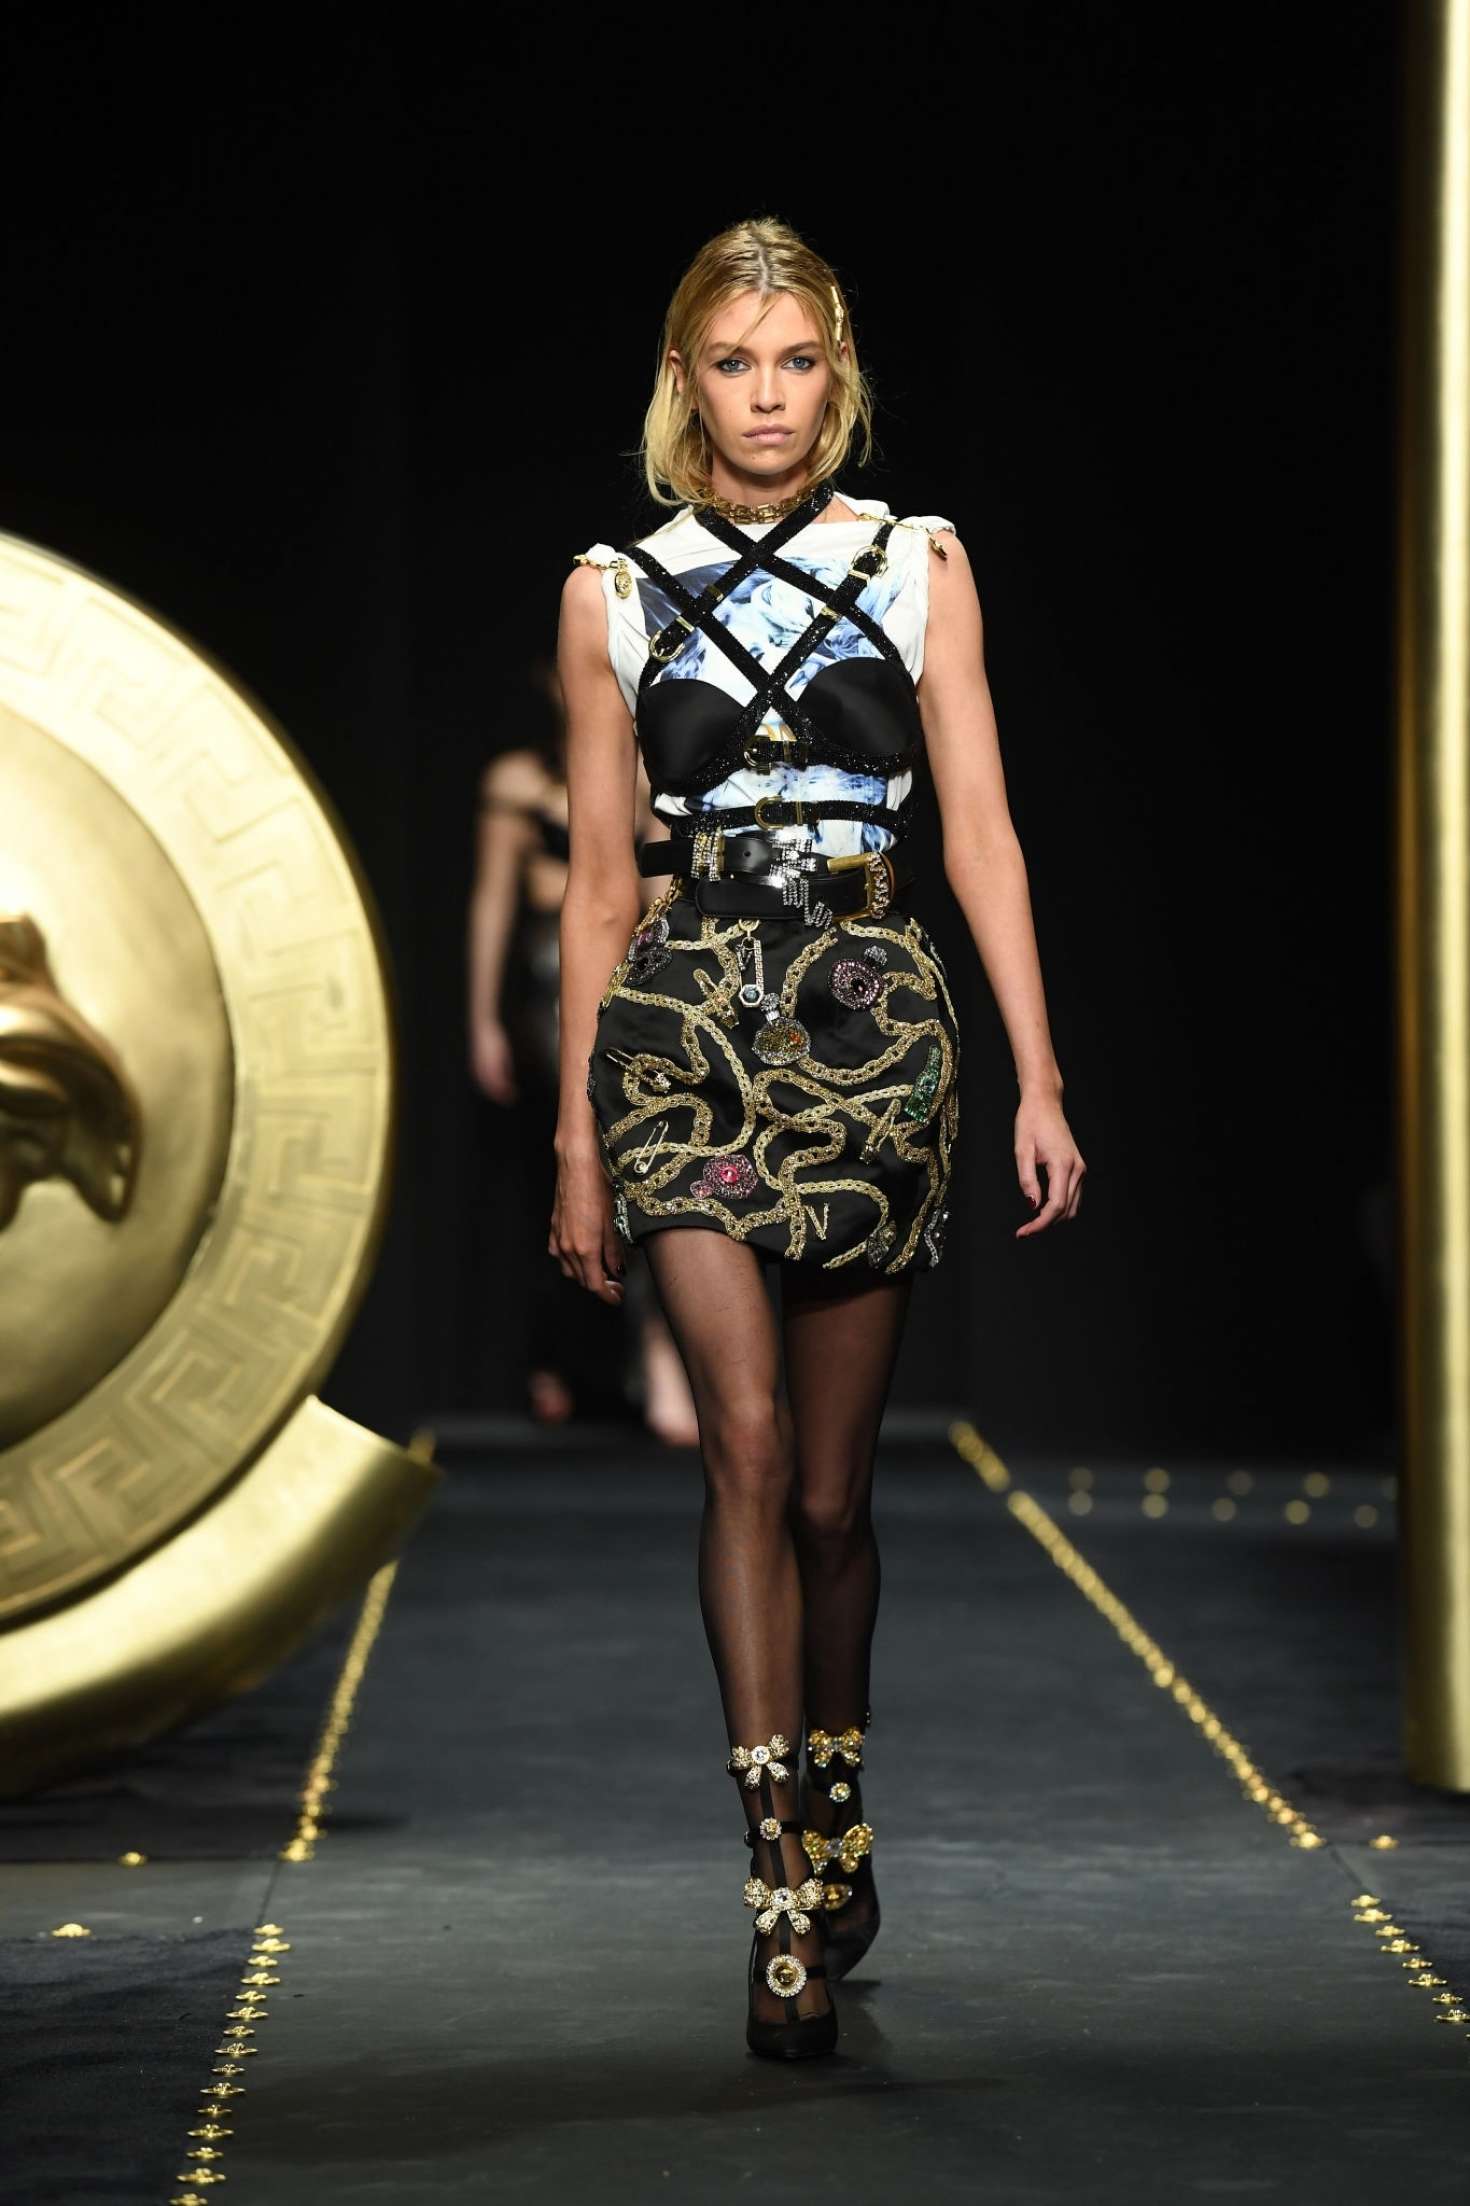 Stella Maxwell Walks the Runway During Milan Fashion Week 